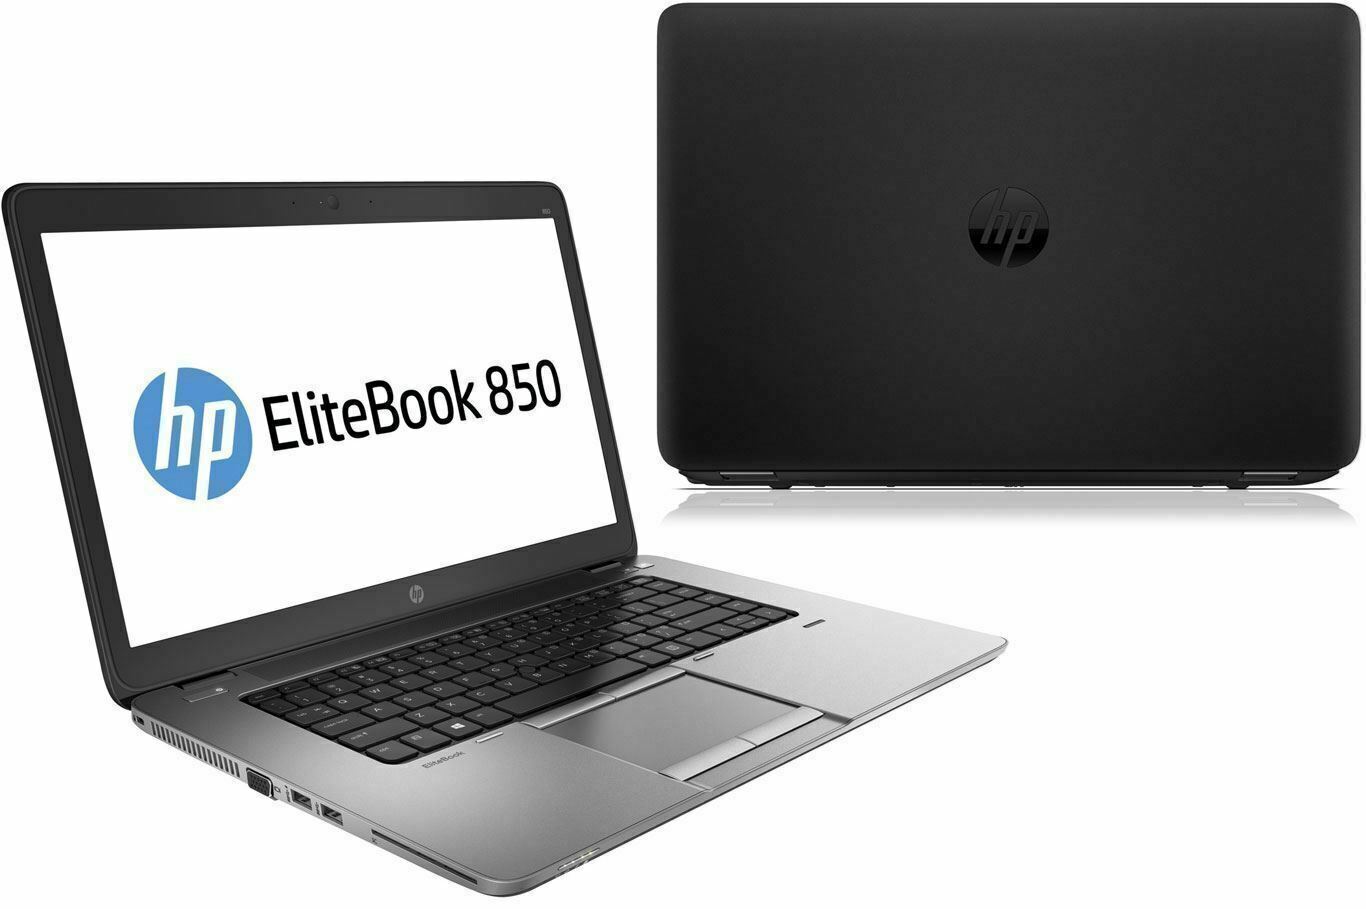 HP EliteBook 850 G1 Core i5-4th Generation Price in Pakistan Laptop Mall